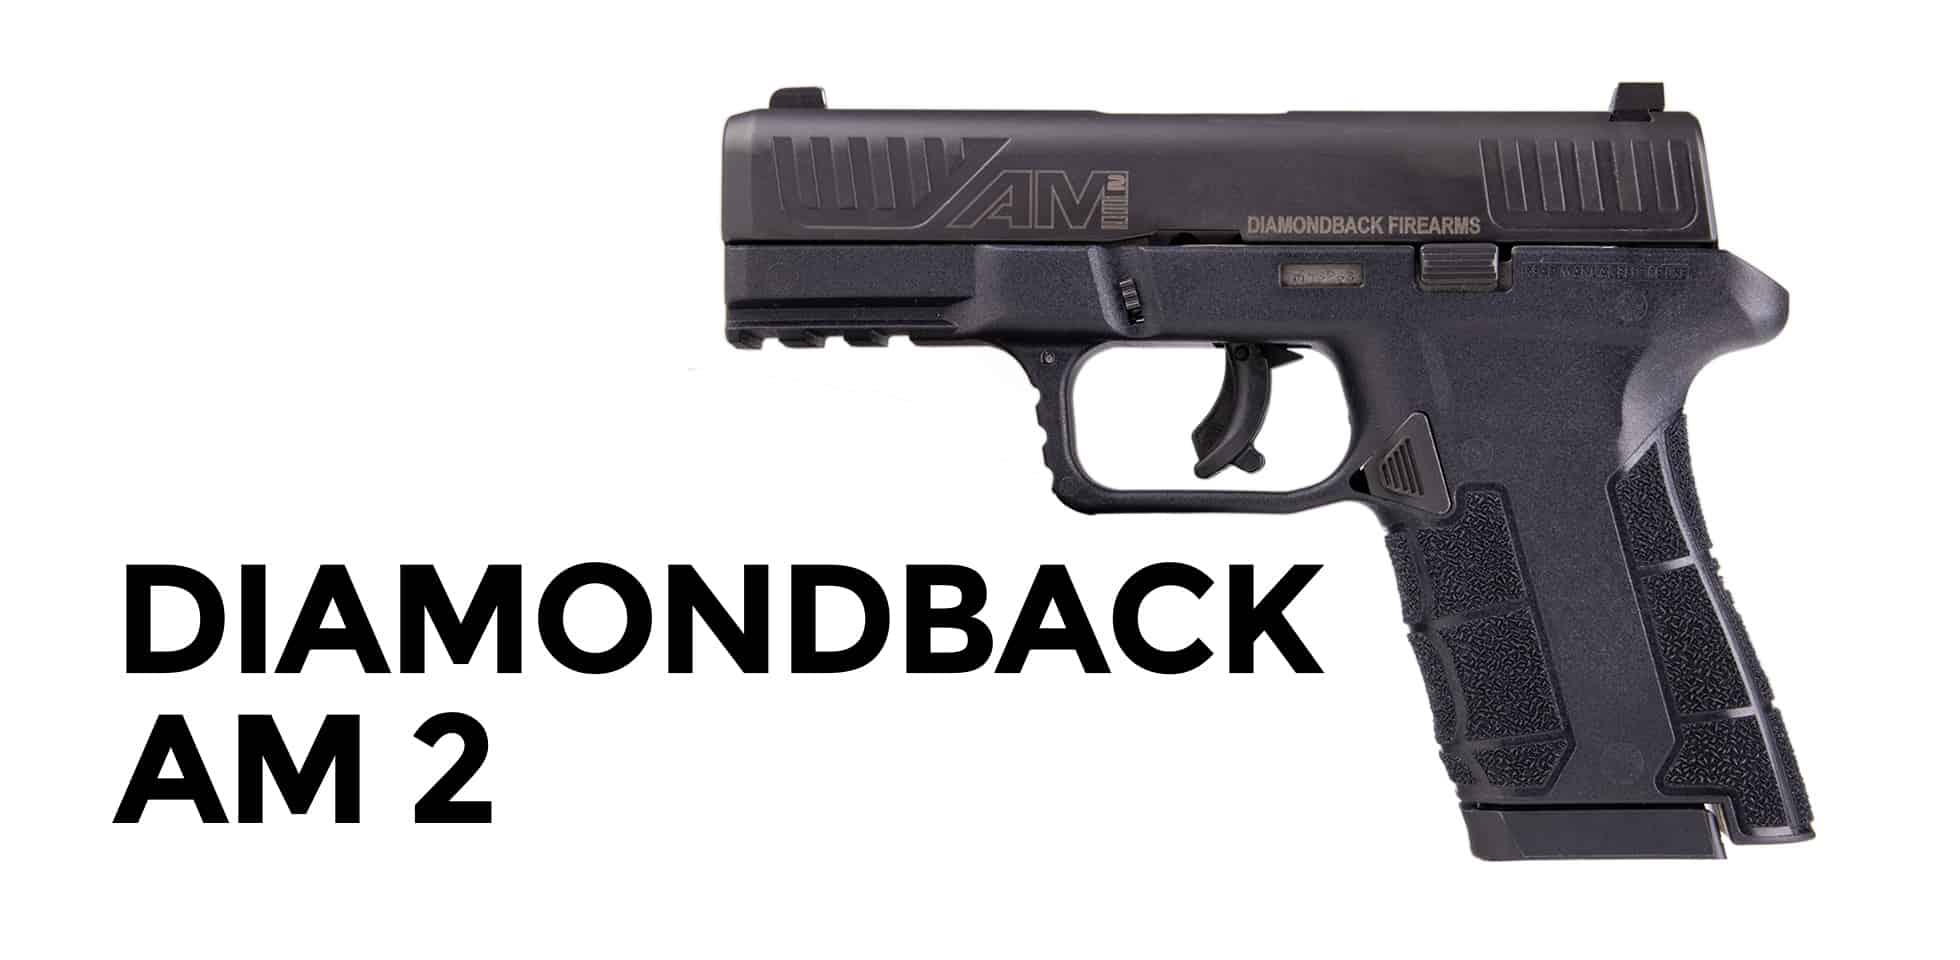 The Diamondback AM2 pistol represents a lot of gun for the money